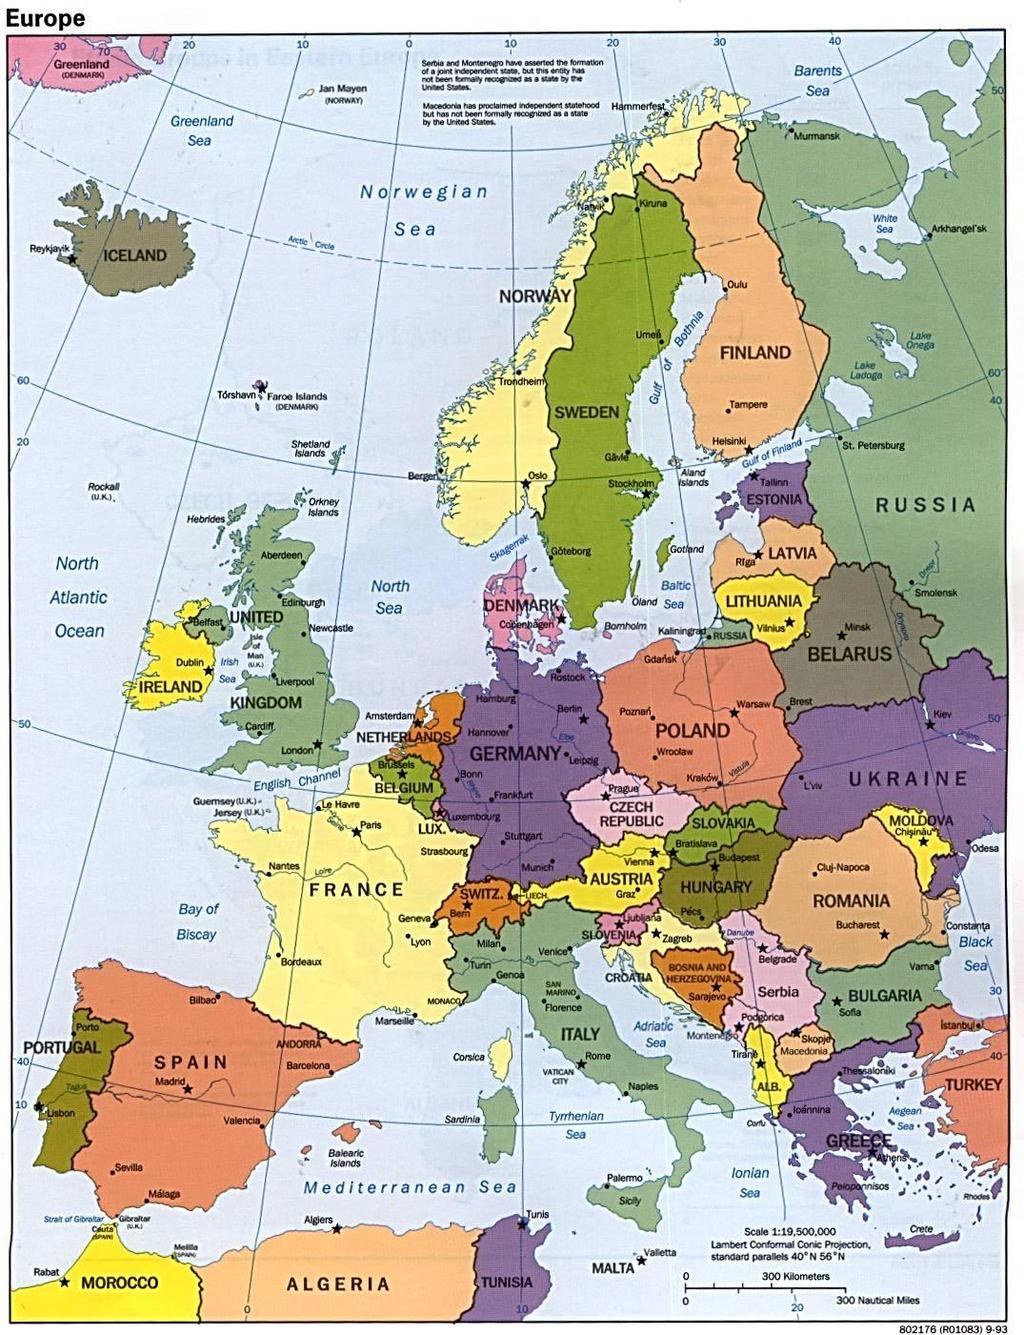 EUROASPIRE IV Countries Ireland Netherlands Finland Russia Germany UK Latvia Sweden France Czech Republic Poland